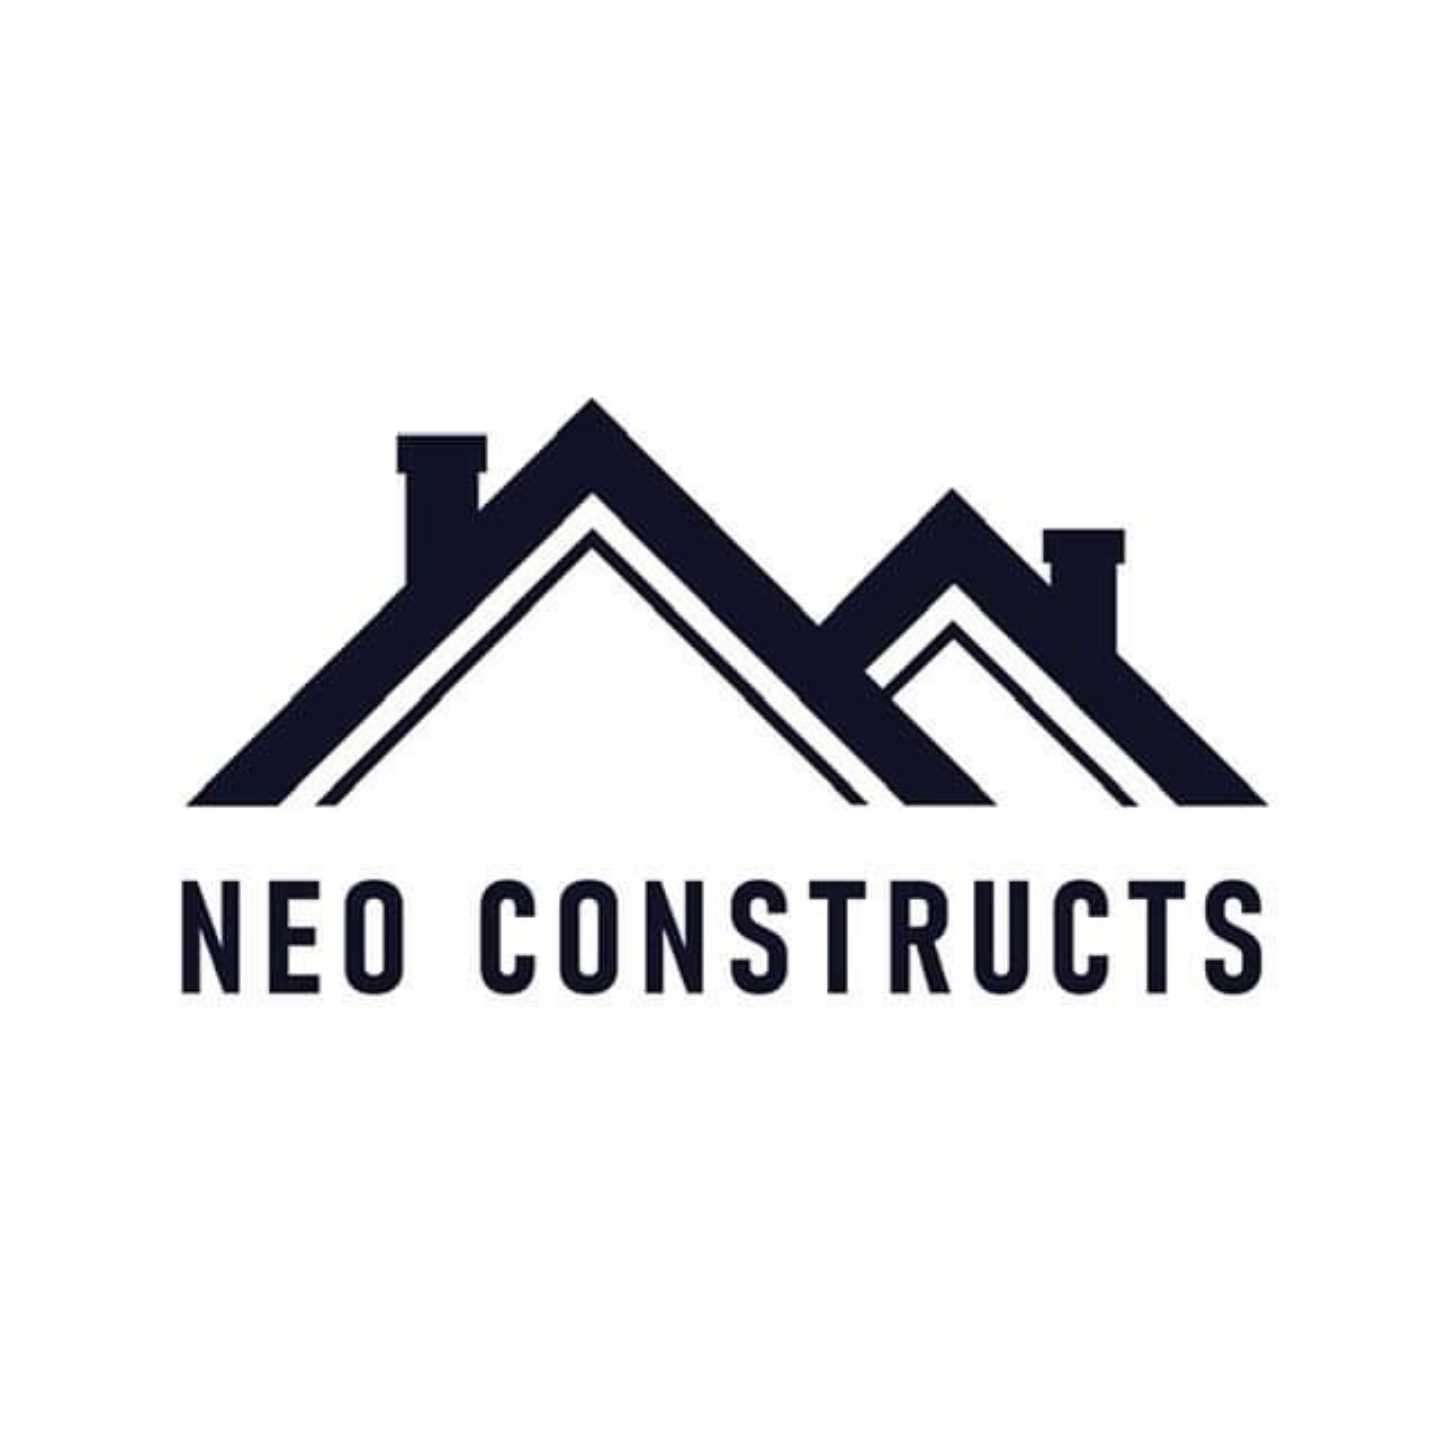 NEO Constructs Logo